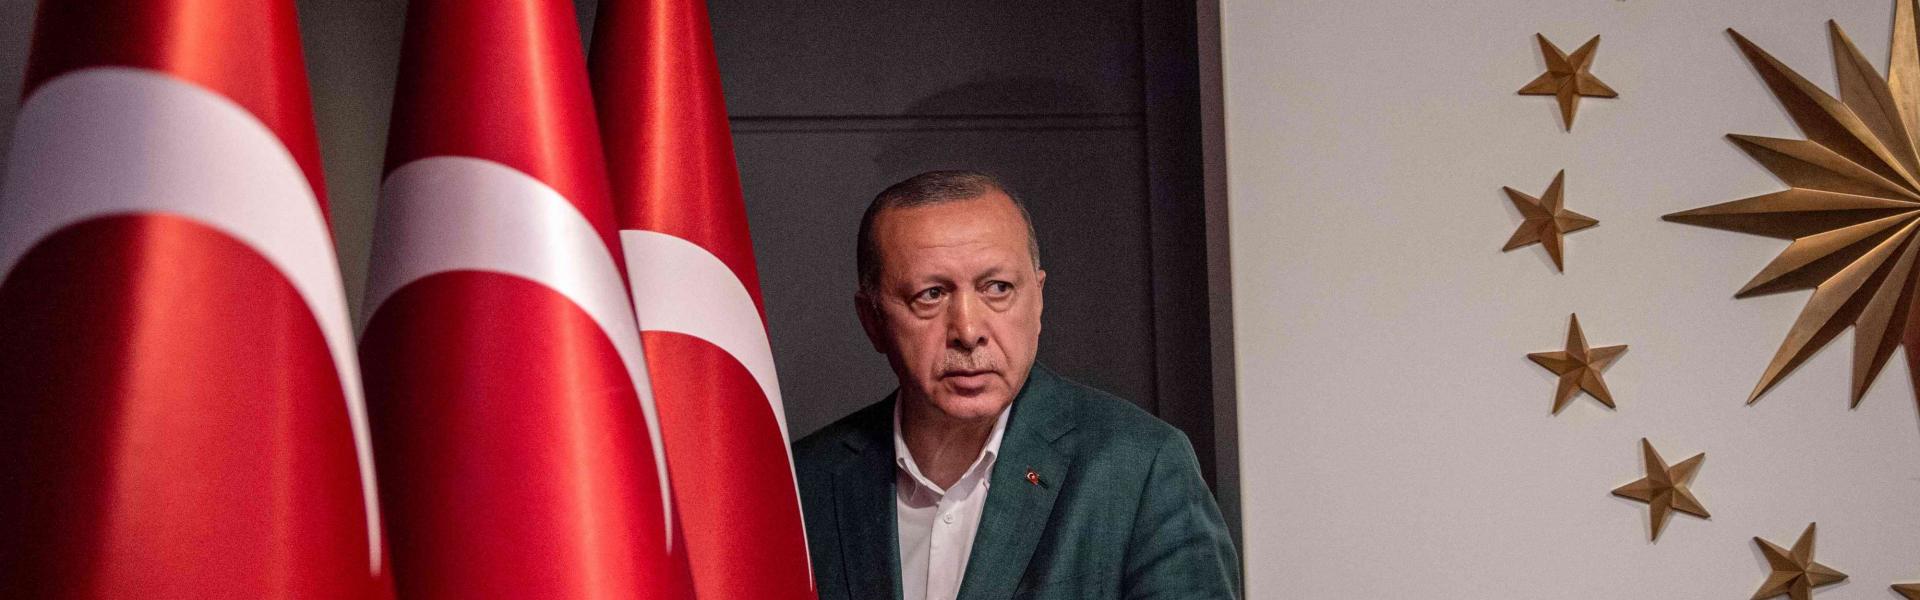 Erdogan Crossed a Line on Turkey’s Democracy: Balance of Power 6